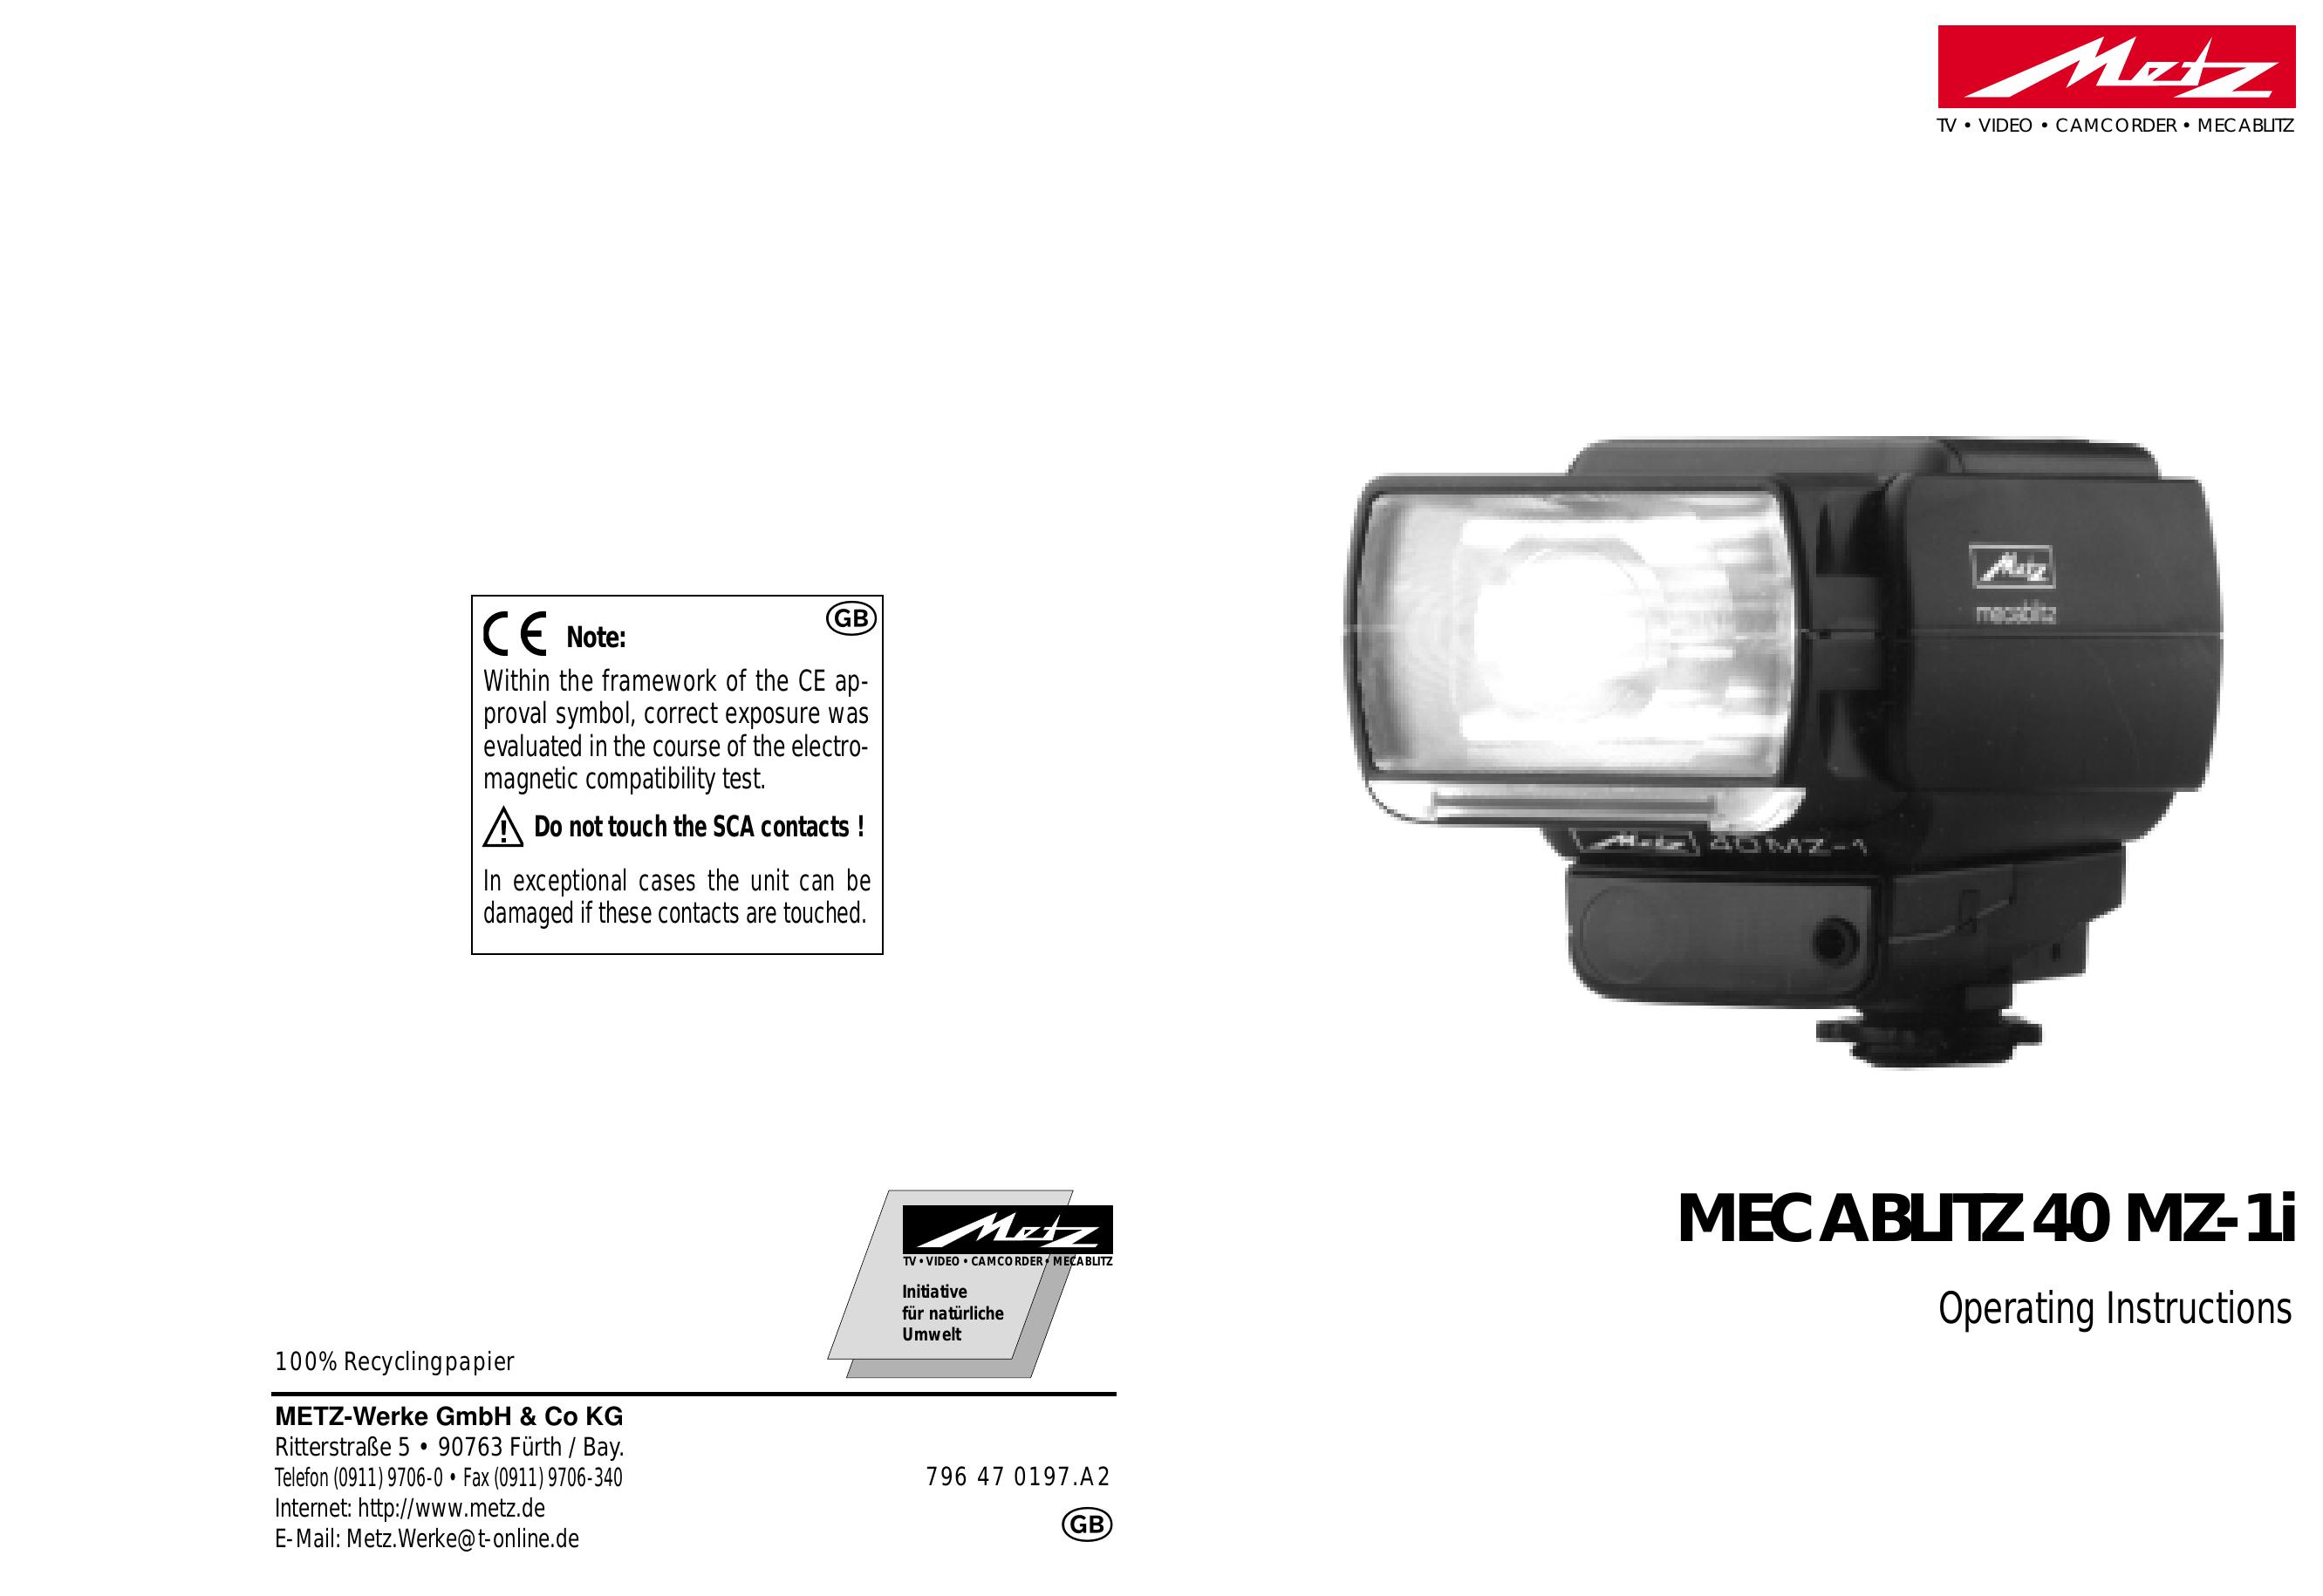 Metz MZ-1i Film Camera User Manual